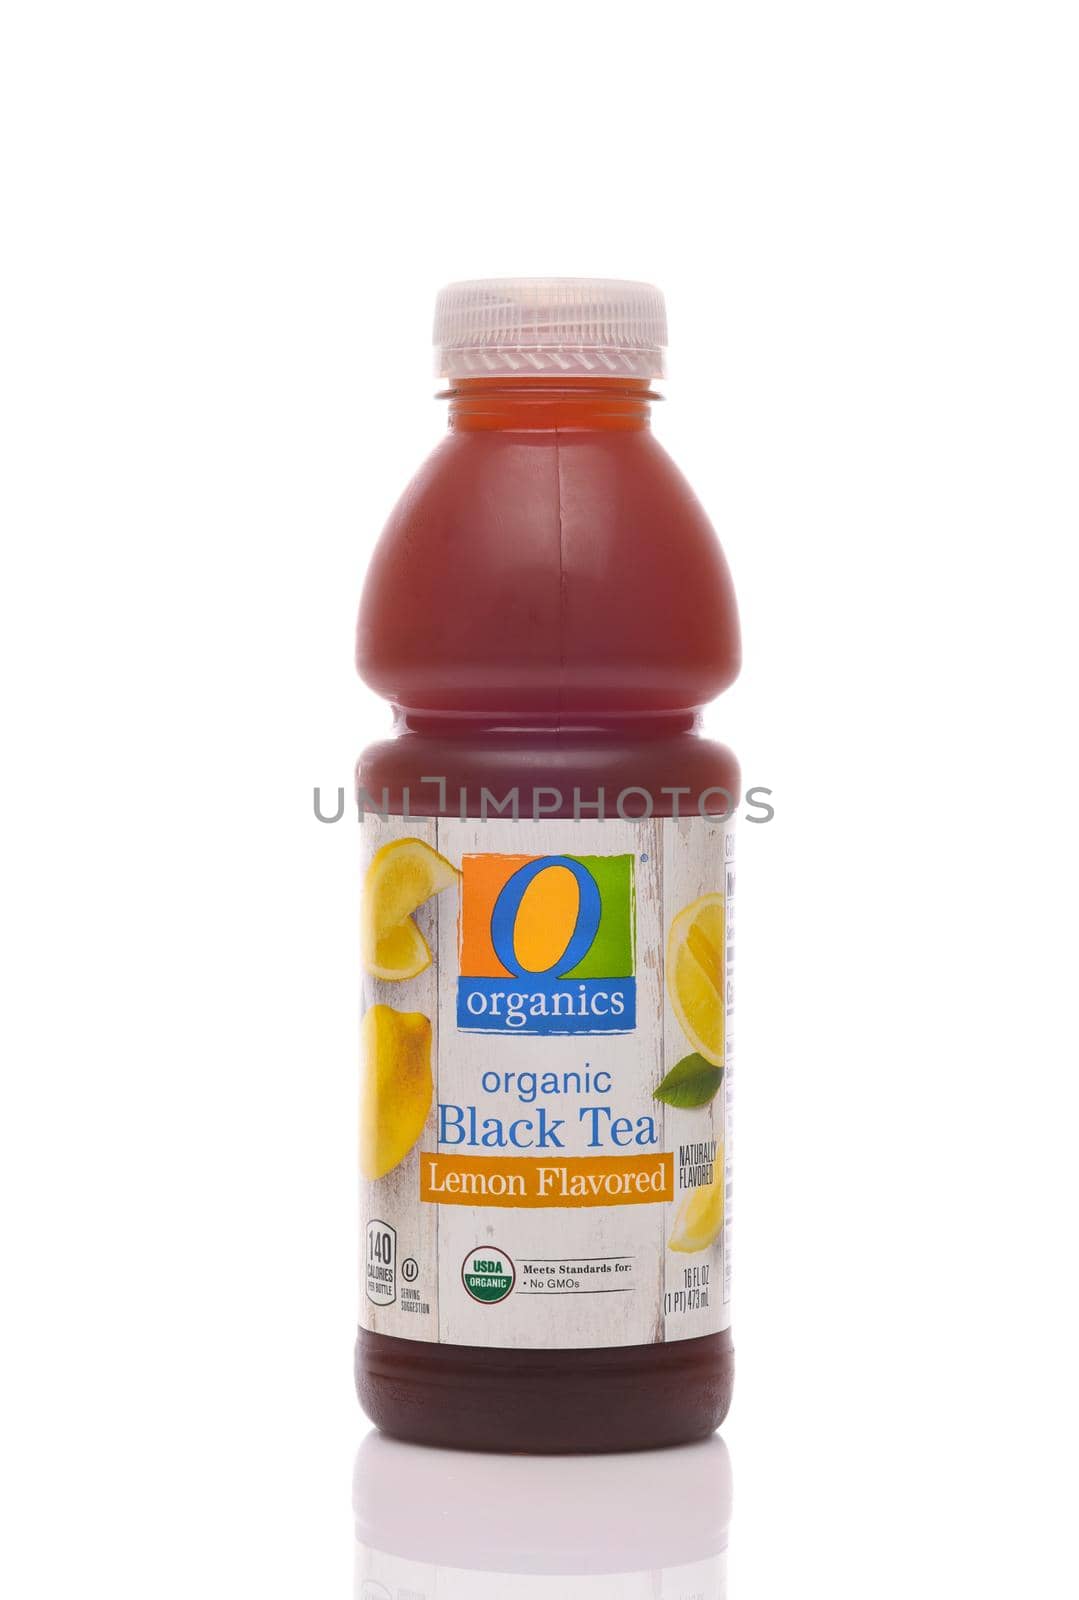 A bottle of Organics Black Tea with Lemon Flavor. by sCukrov